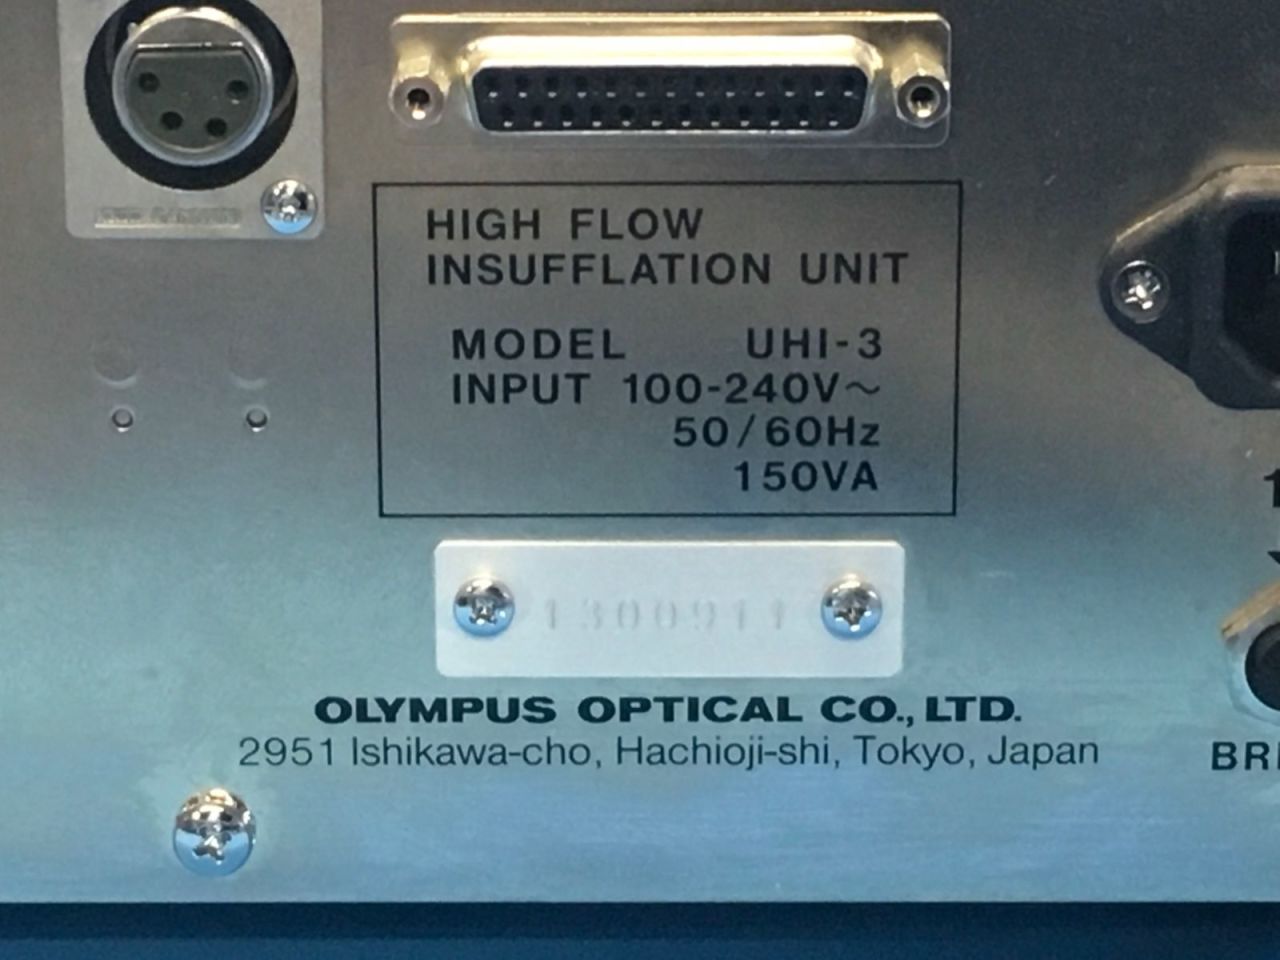 Olympus uhi 4 insufflator user manual